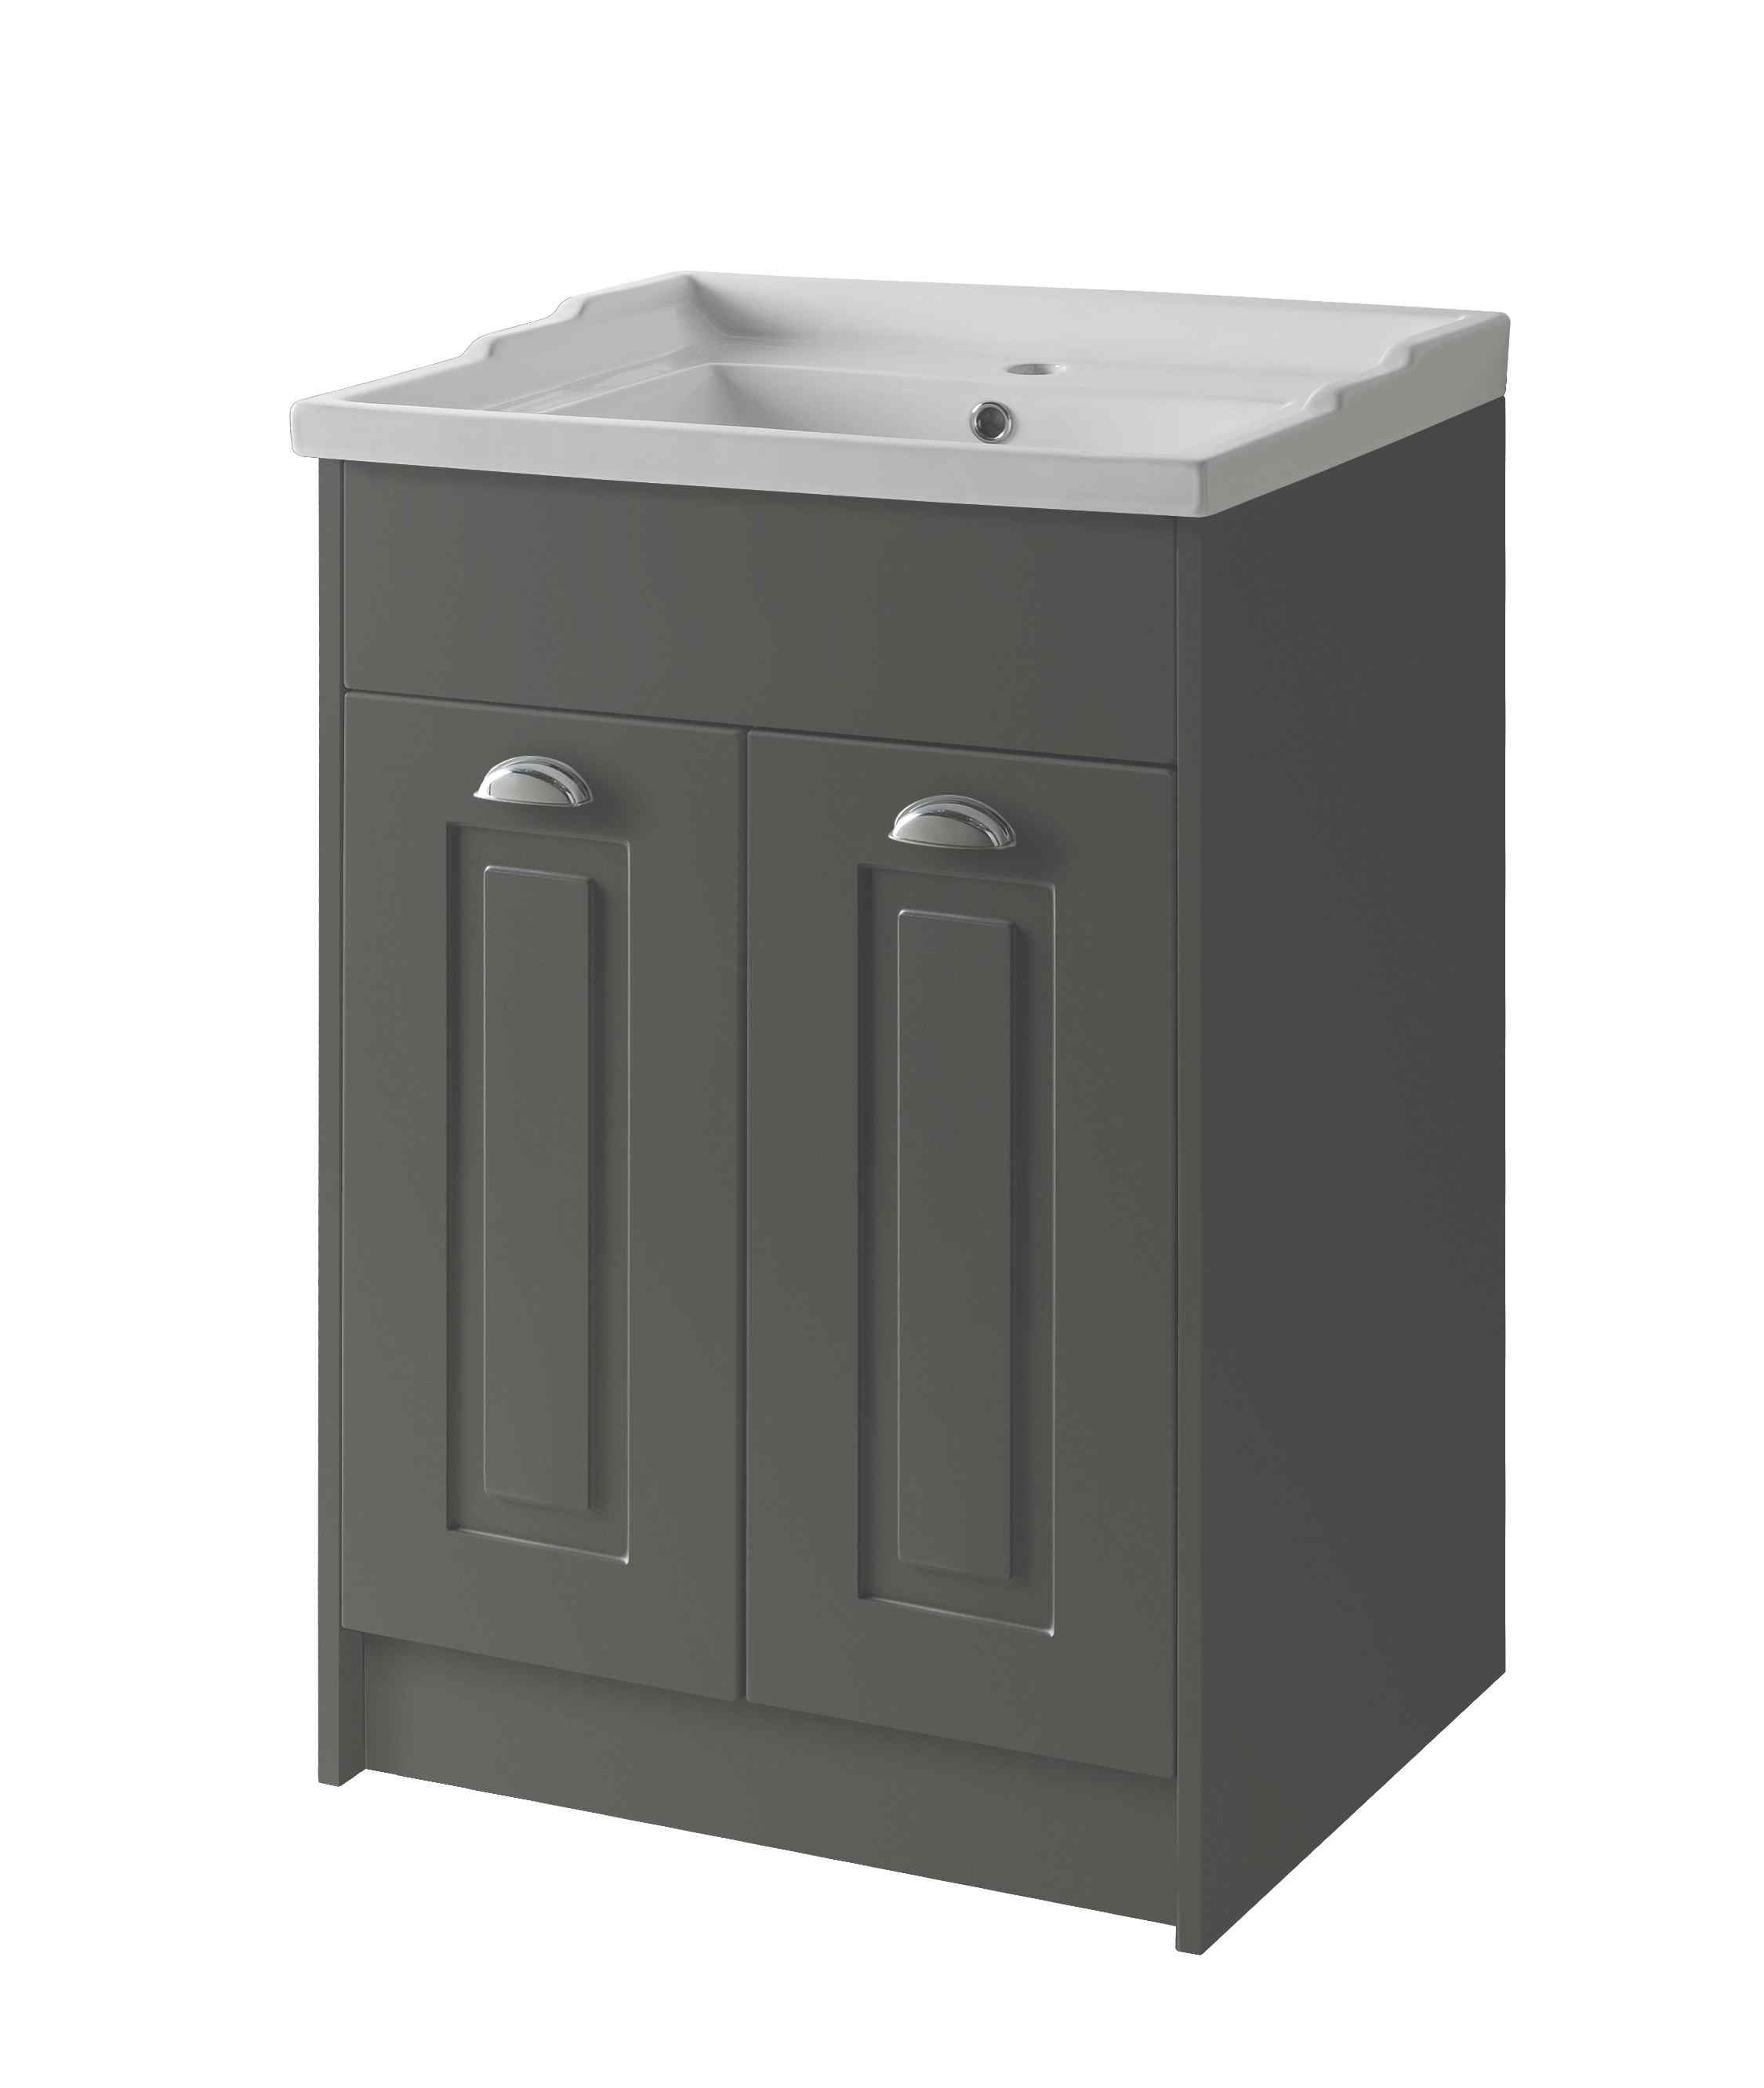 Astley 600mm Matt Grey Freestanding Ceramic Basin & Toilet Bathroom Furniture